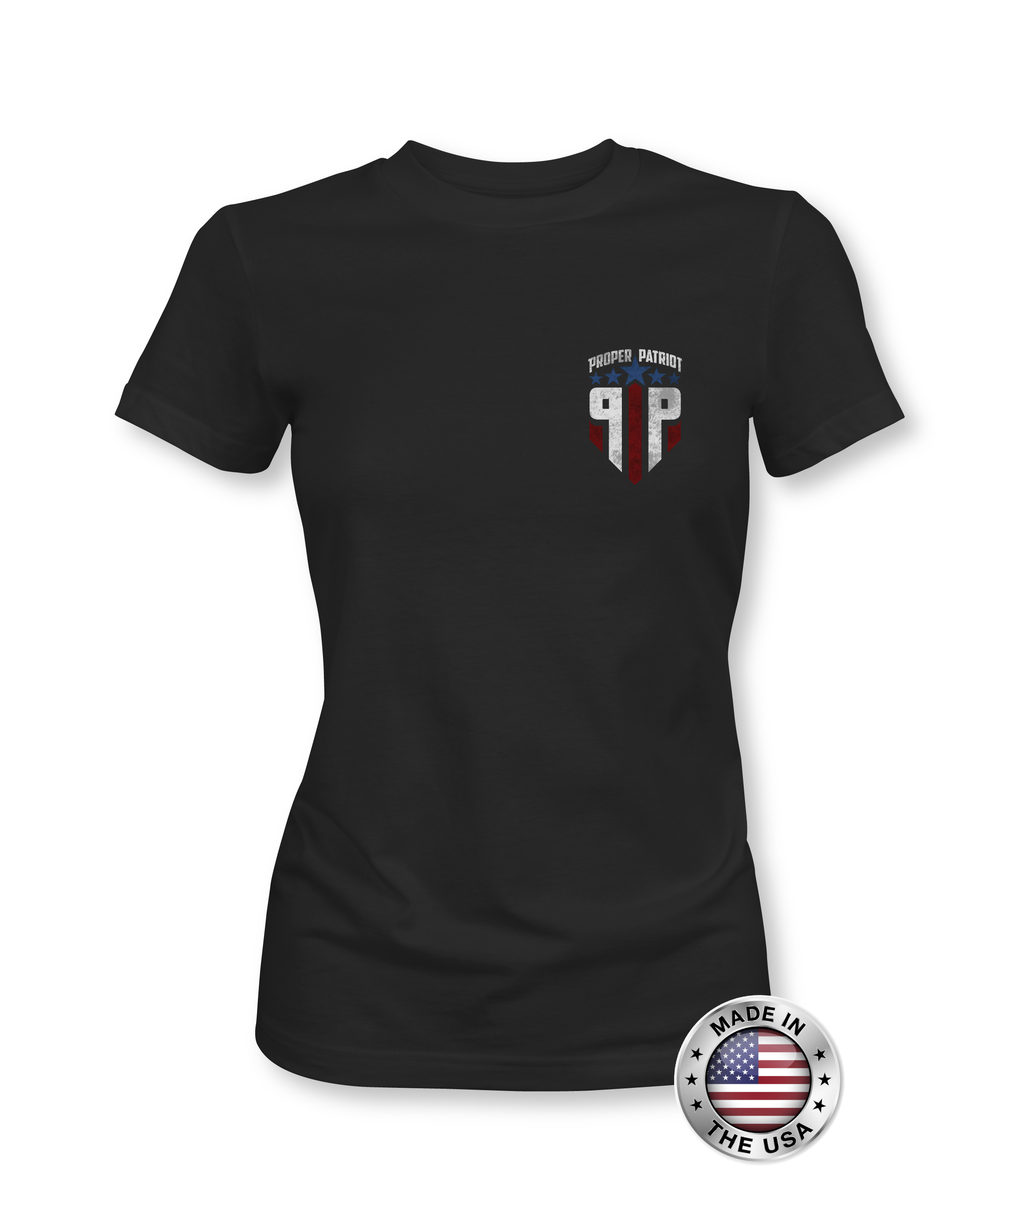 Basic Small Red White and Blue Proper Patriot Logo - Women's Patriotic Shirts - Proper Patriot